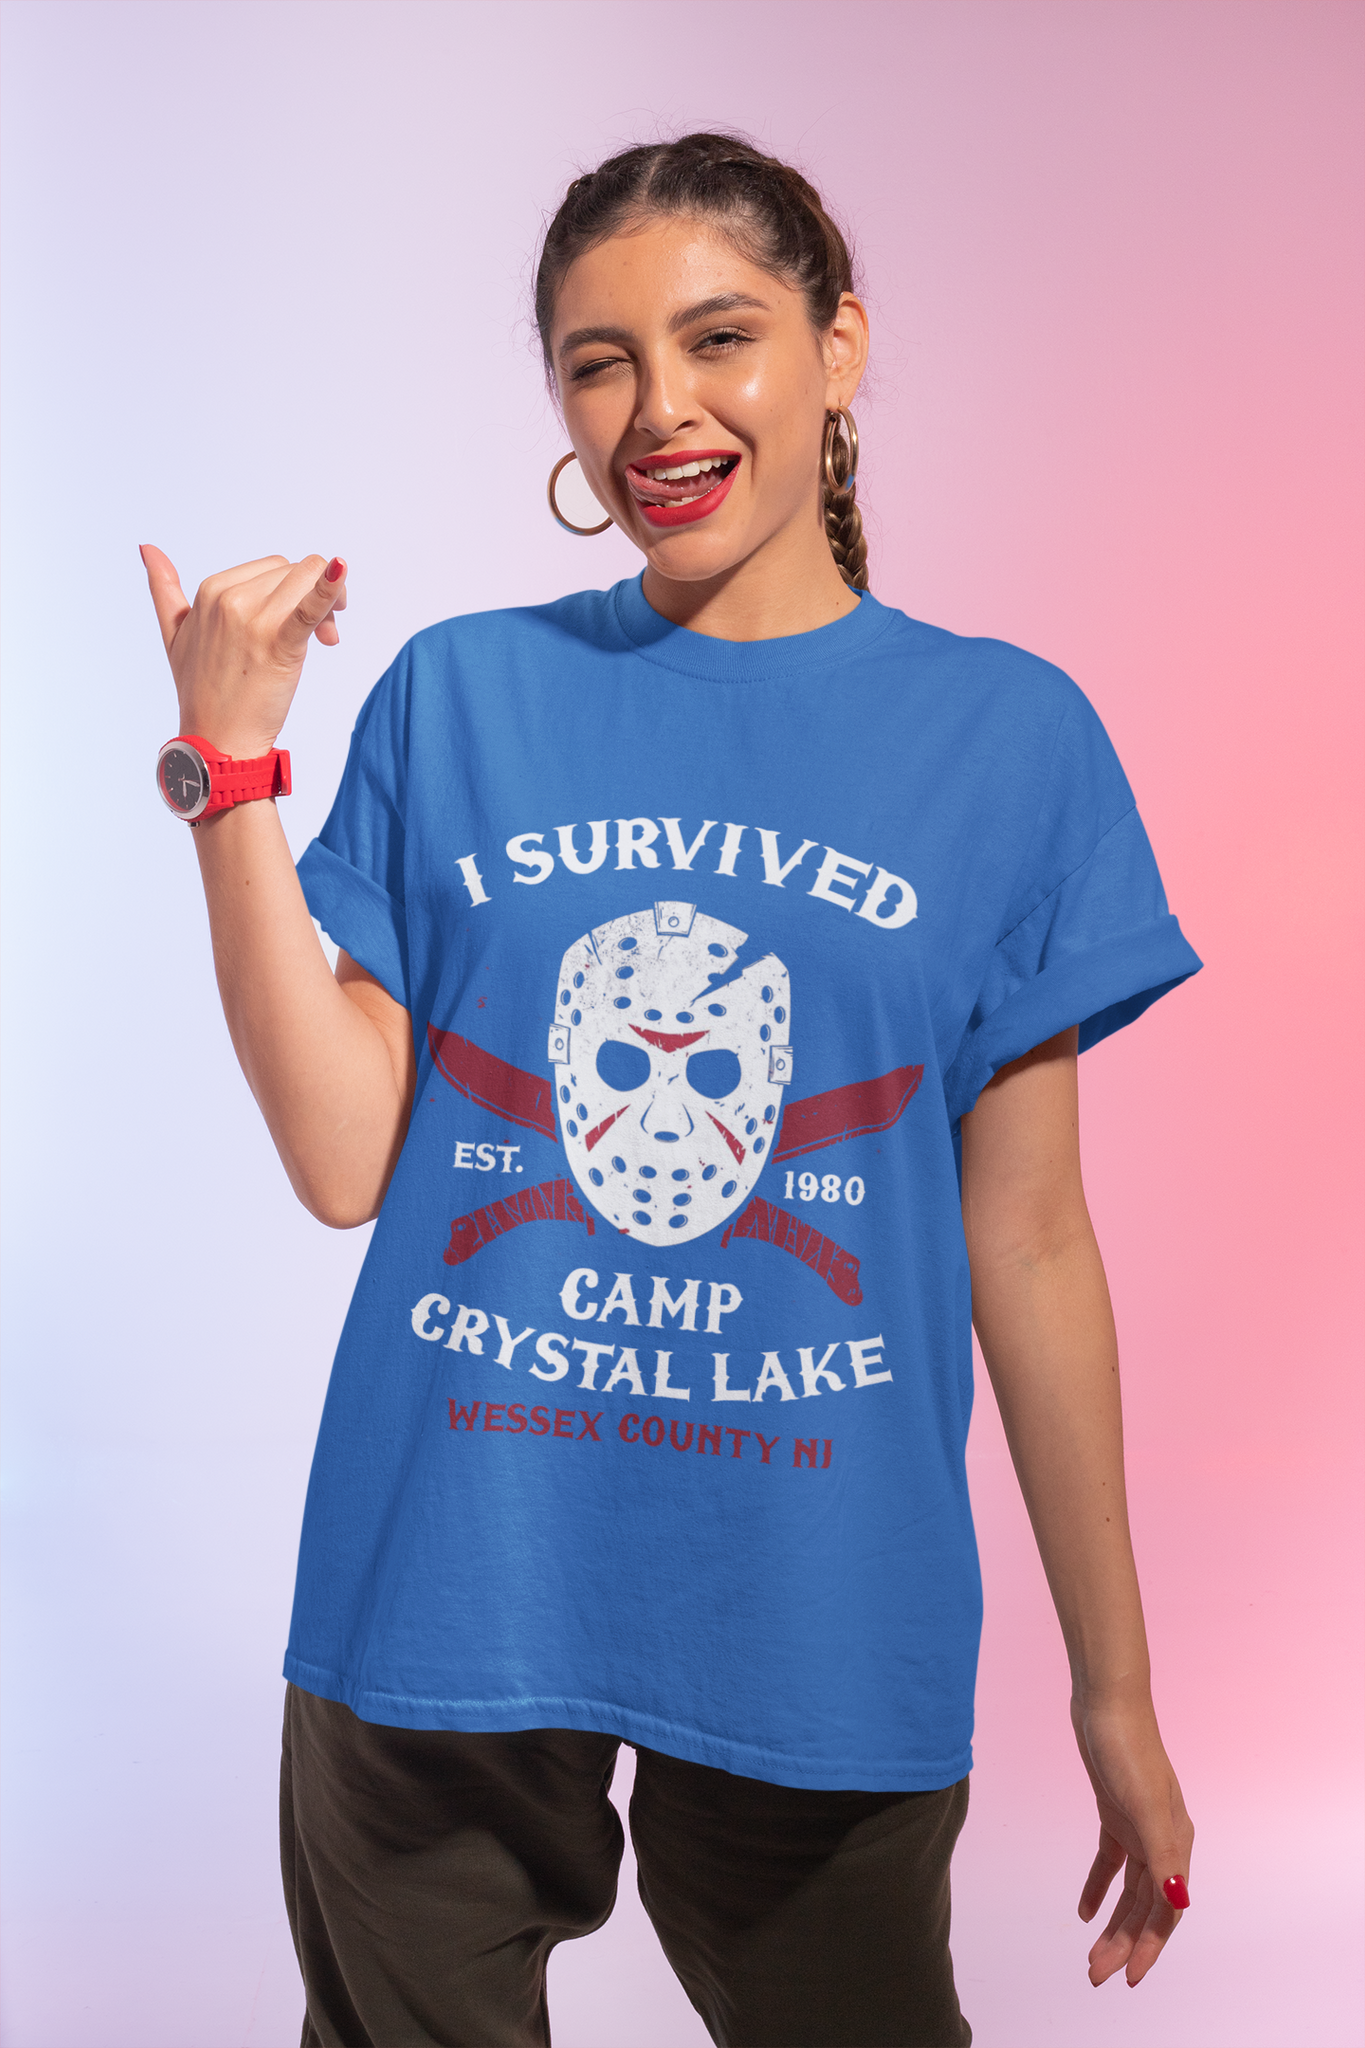 Friday 13th T Shirt, I Survived Camp Crystal Lake Tshirt, Jason Voorhees Mask Machete T Shirt, Halloween Gifts